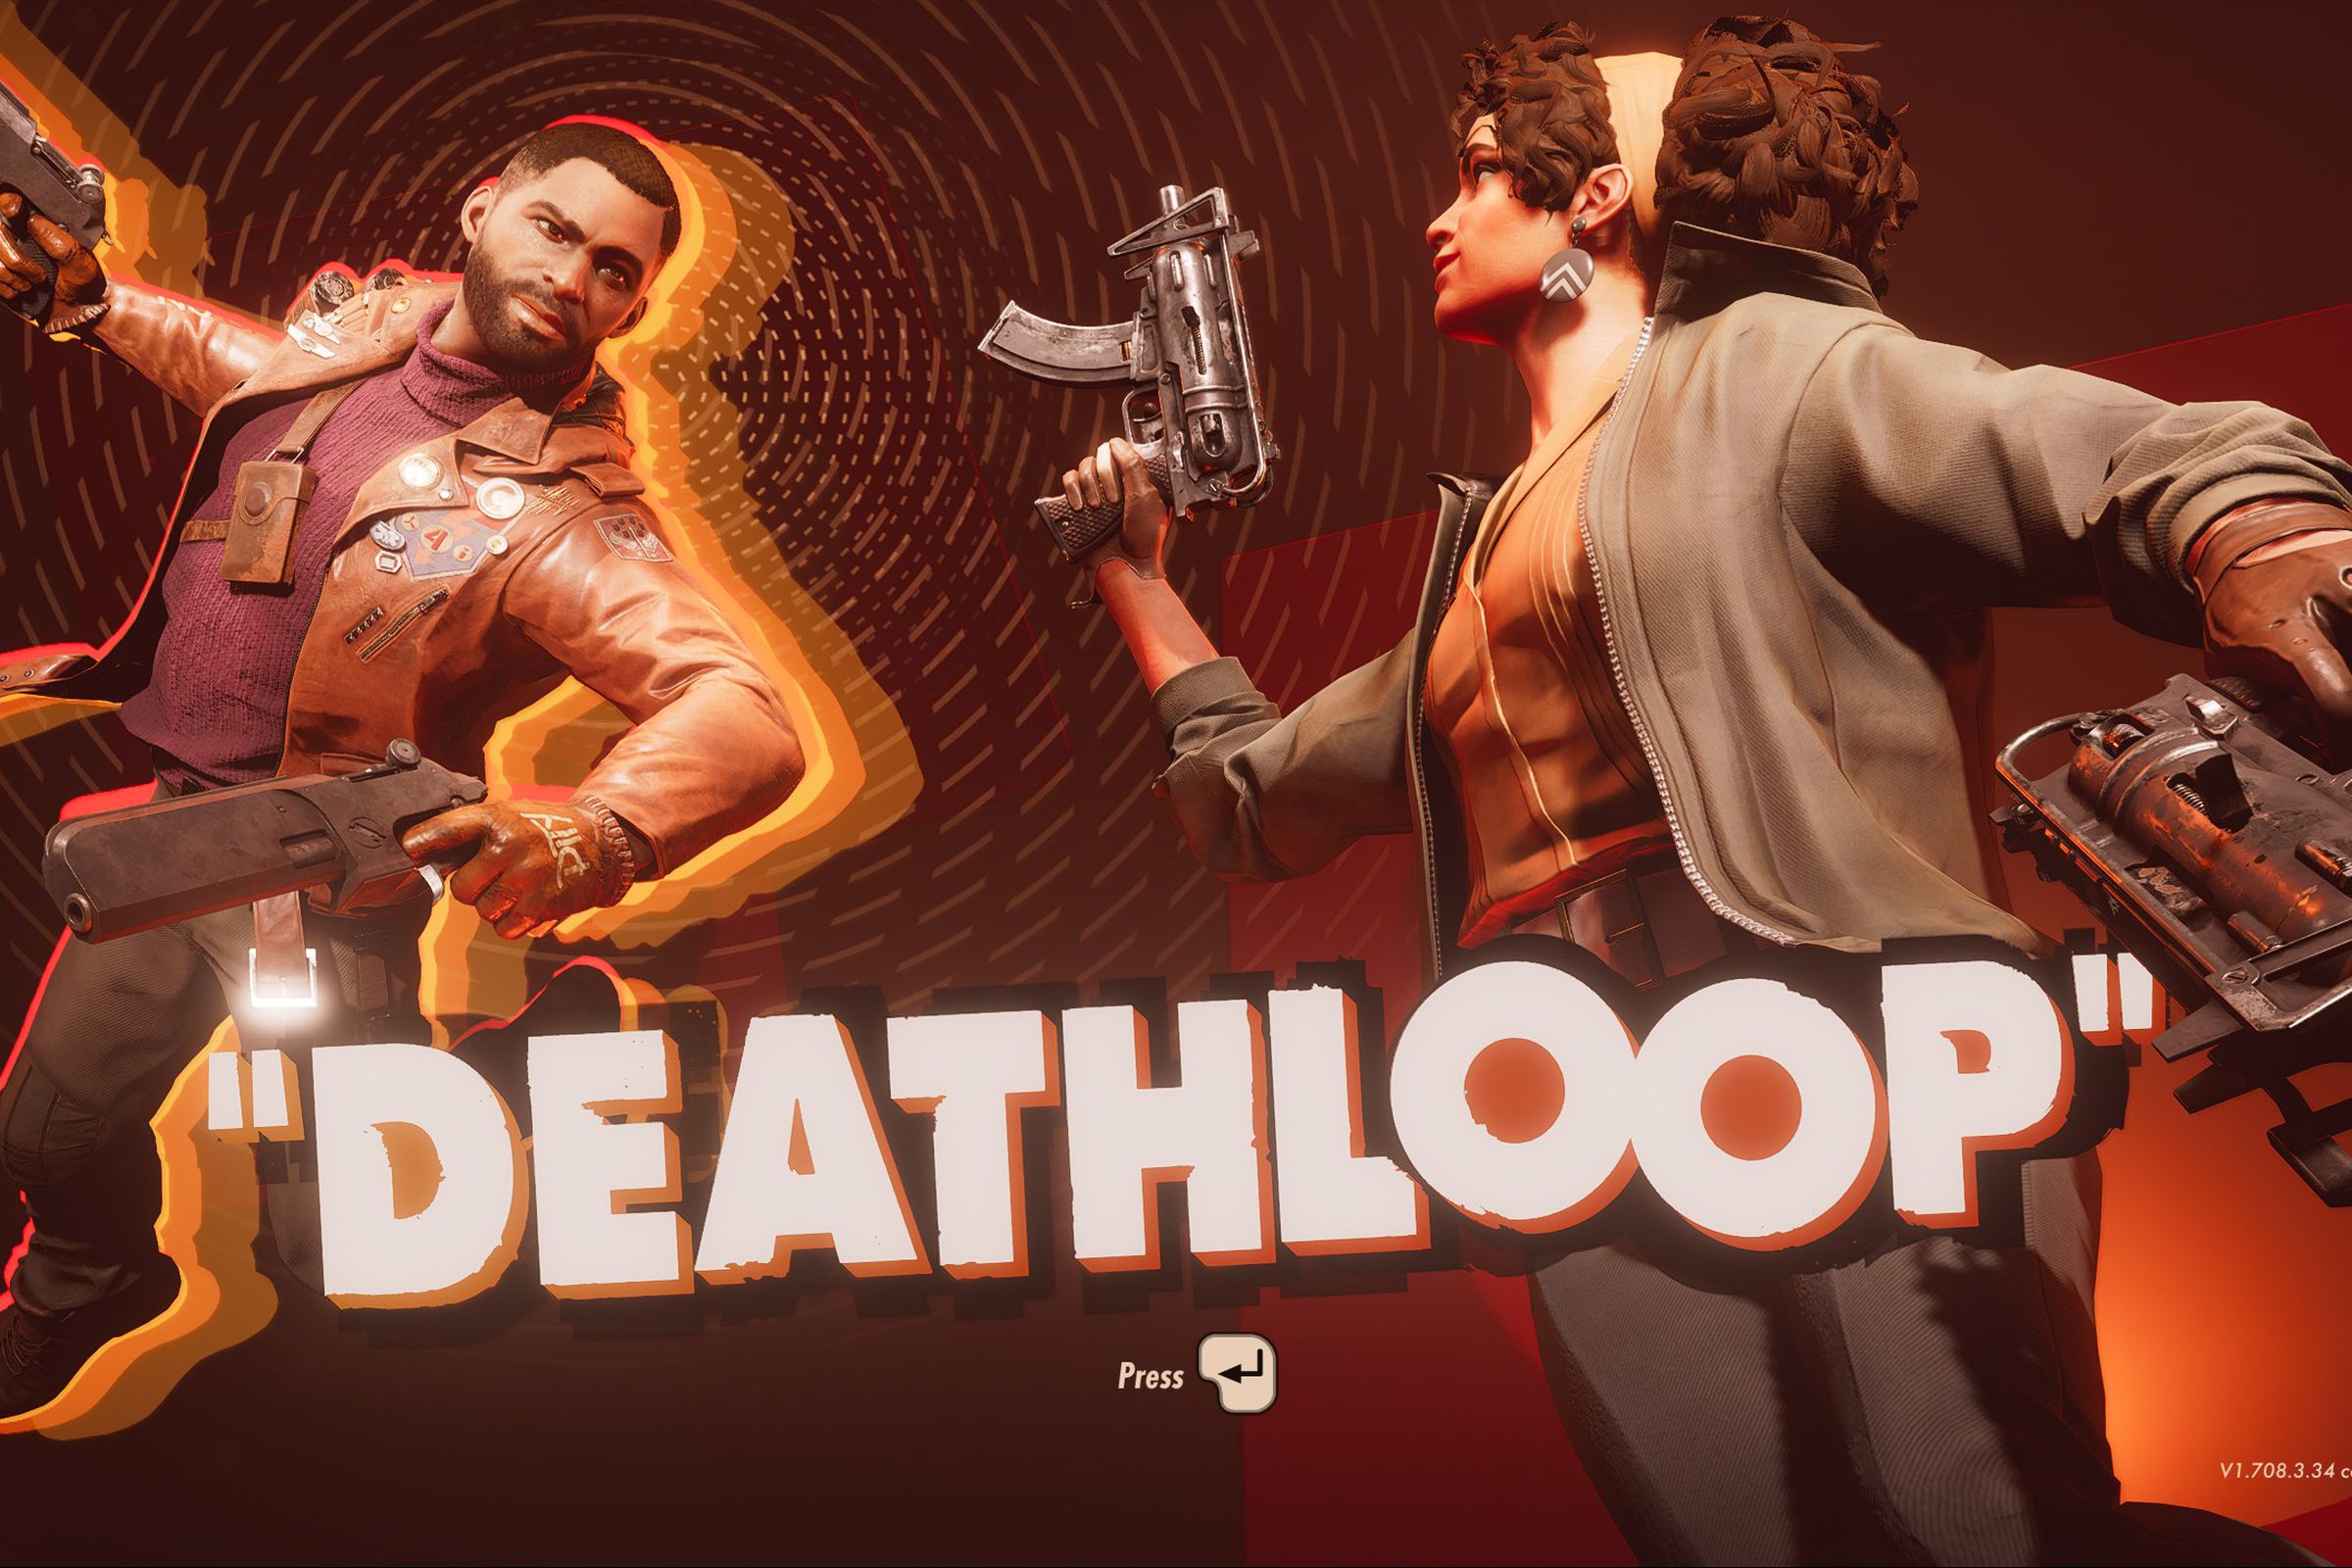 A marketing image for Deathloop